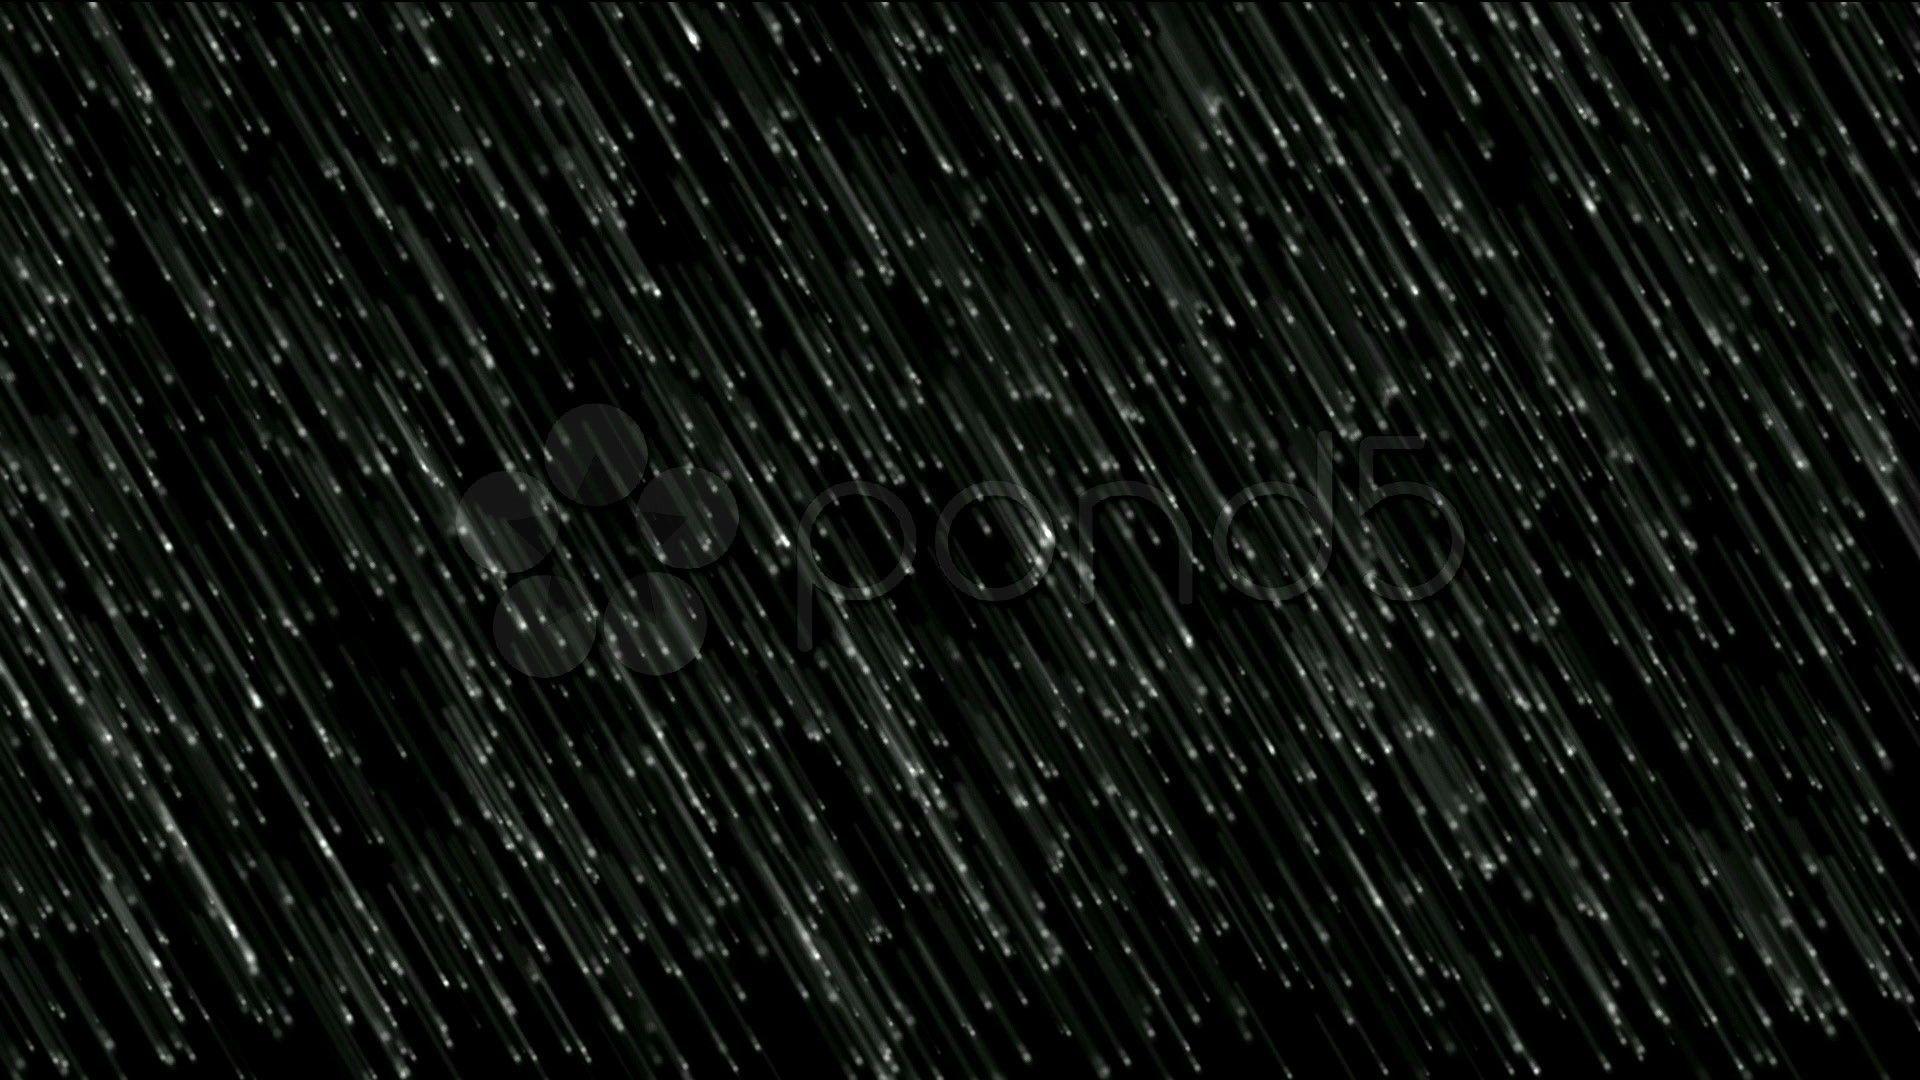 Particle rain. Дождь для фотошопа. Текстура дождя. Дождь на черном фоне. Эффект дождя.